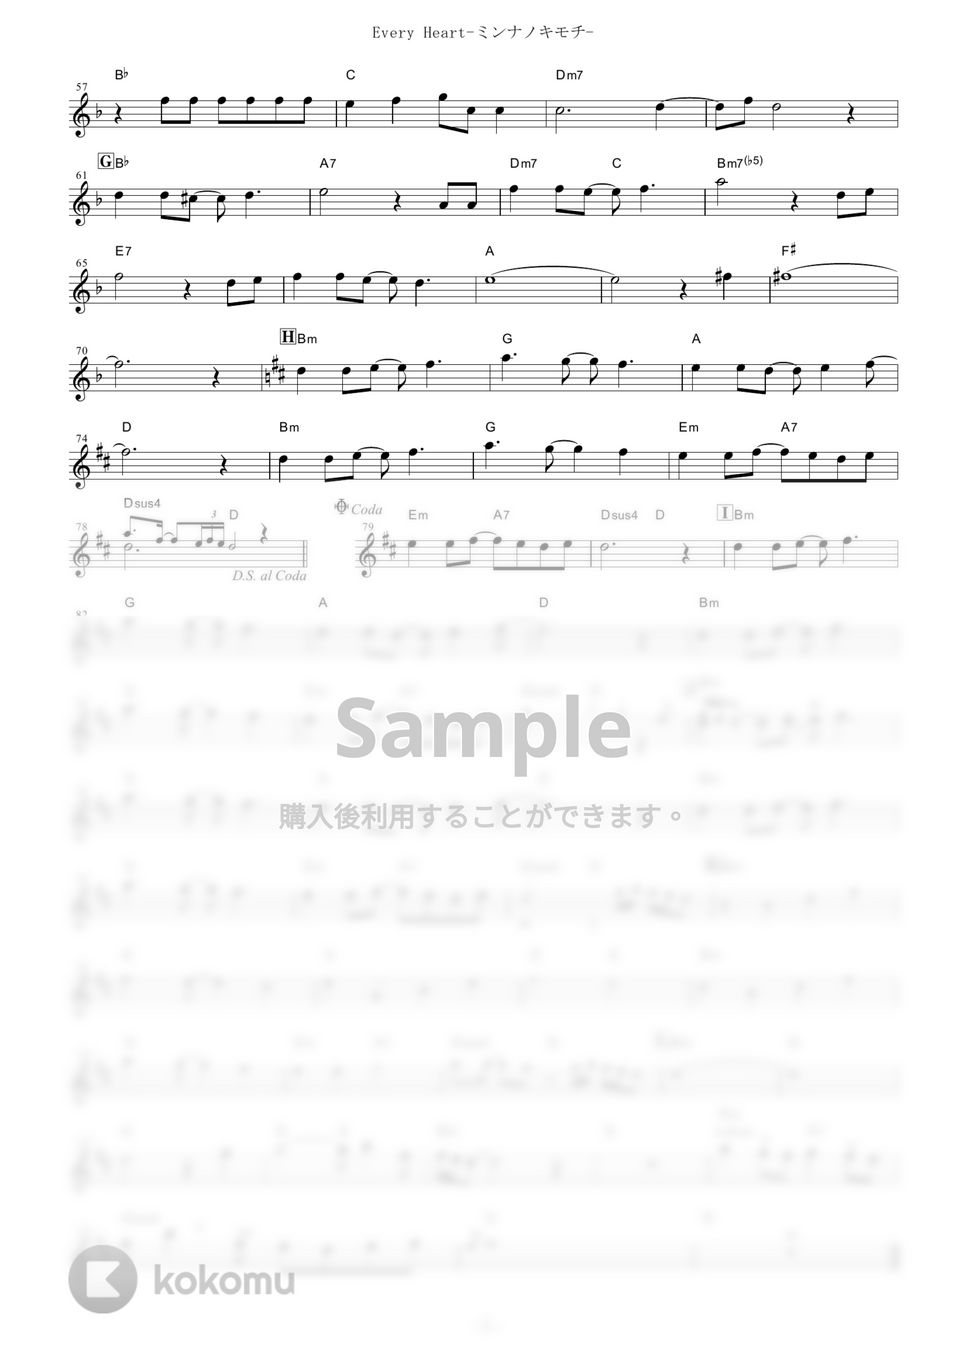 BoA - Every Heart-ミンナノキモチ- (『犬夜叉』 / in Eb) by muta-sax